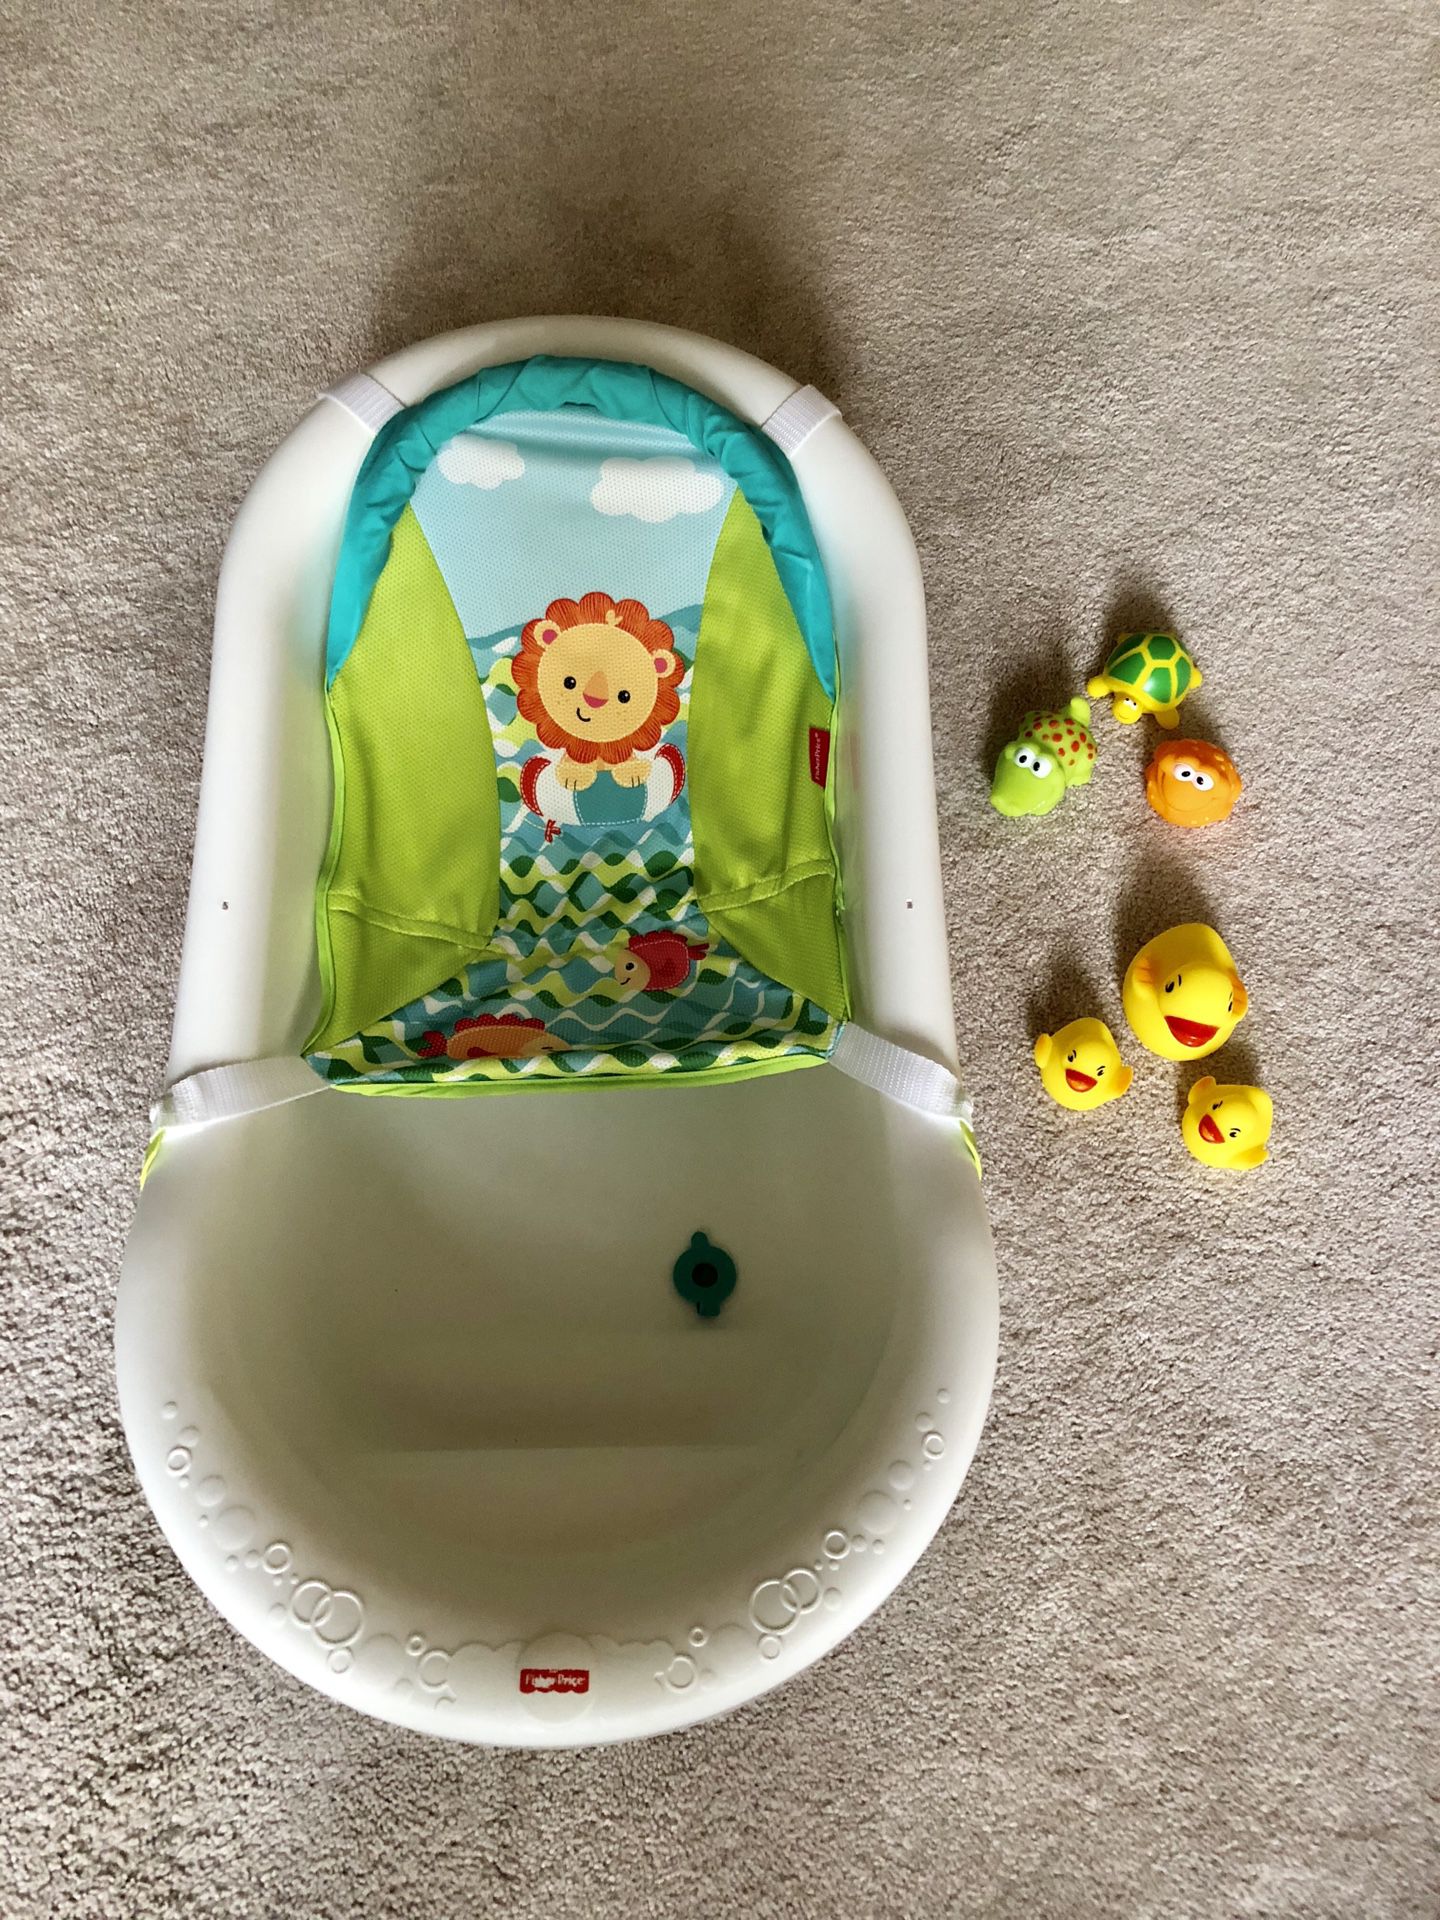 Baby bathtub and toys